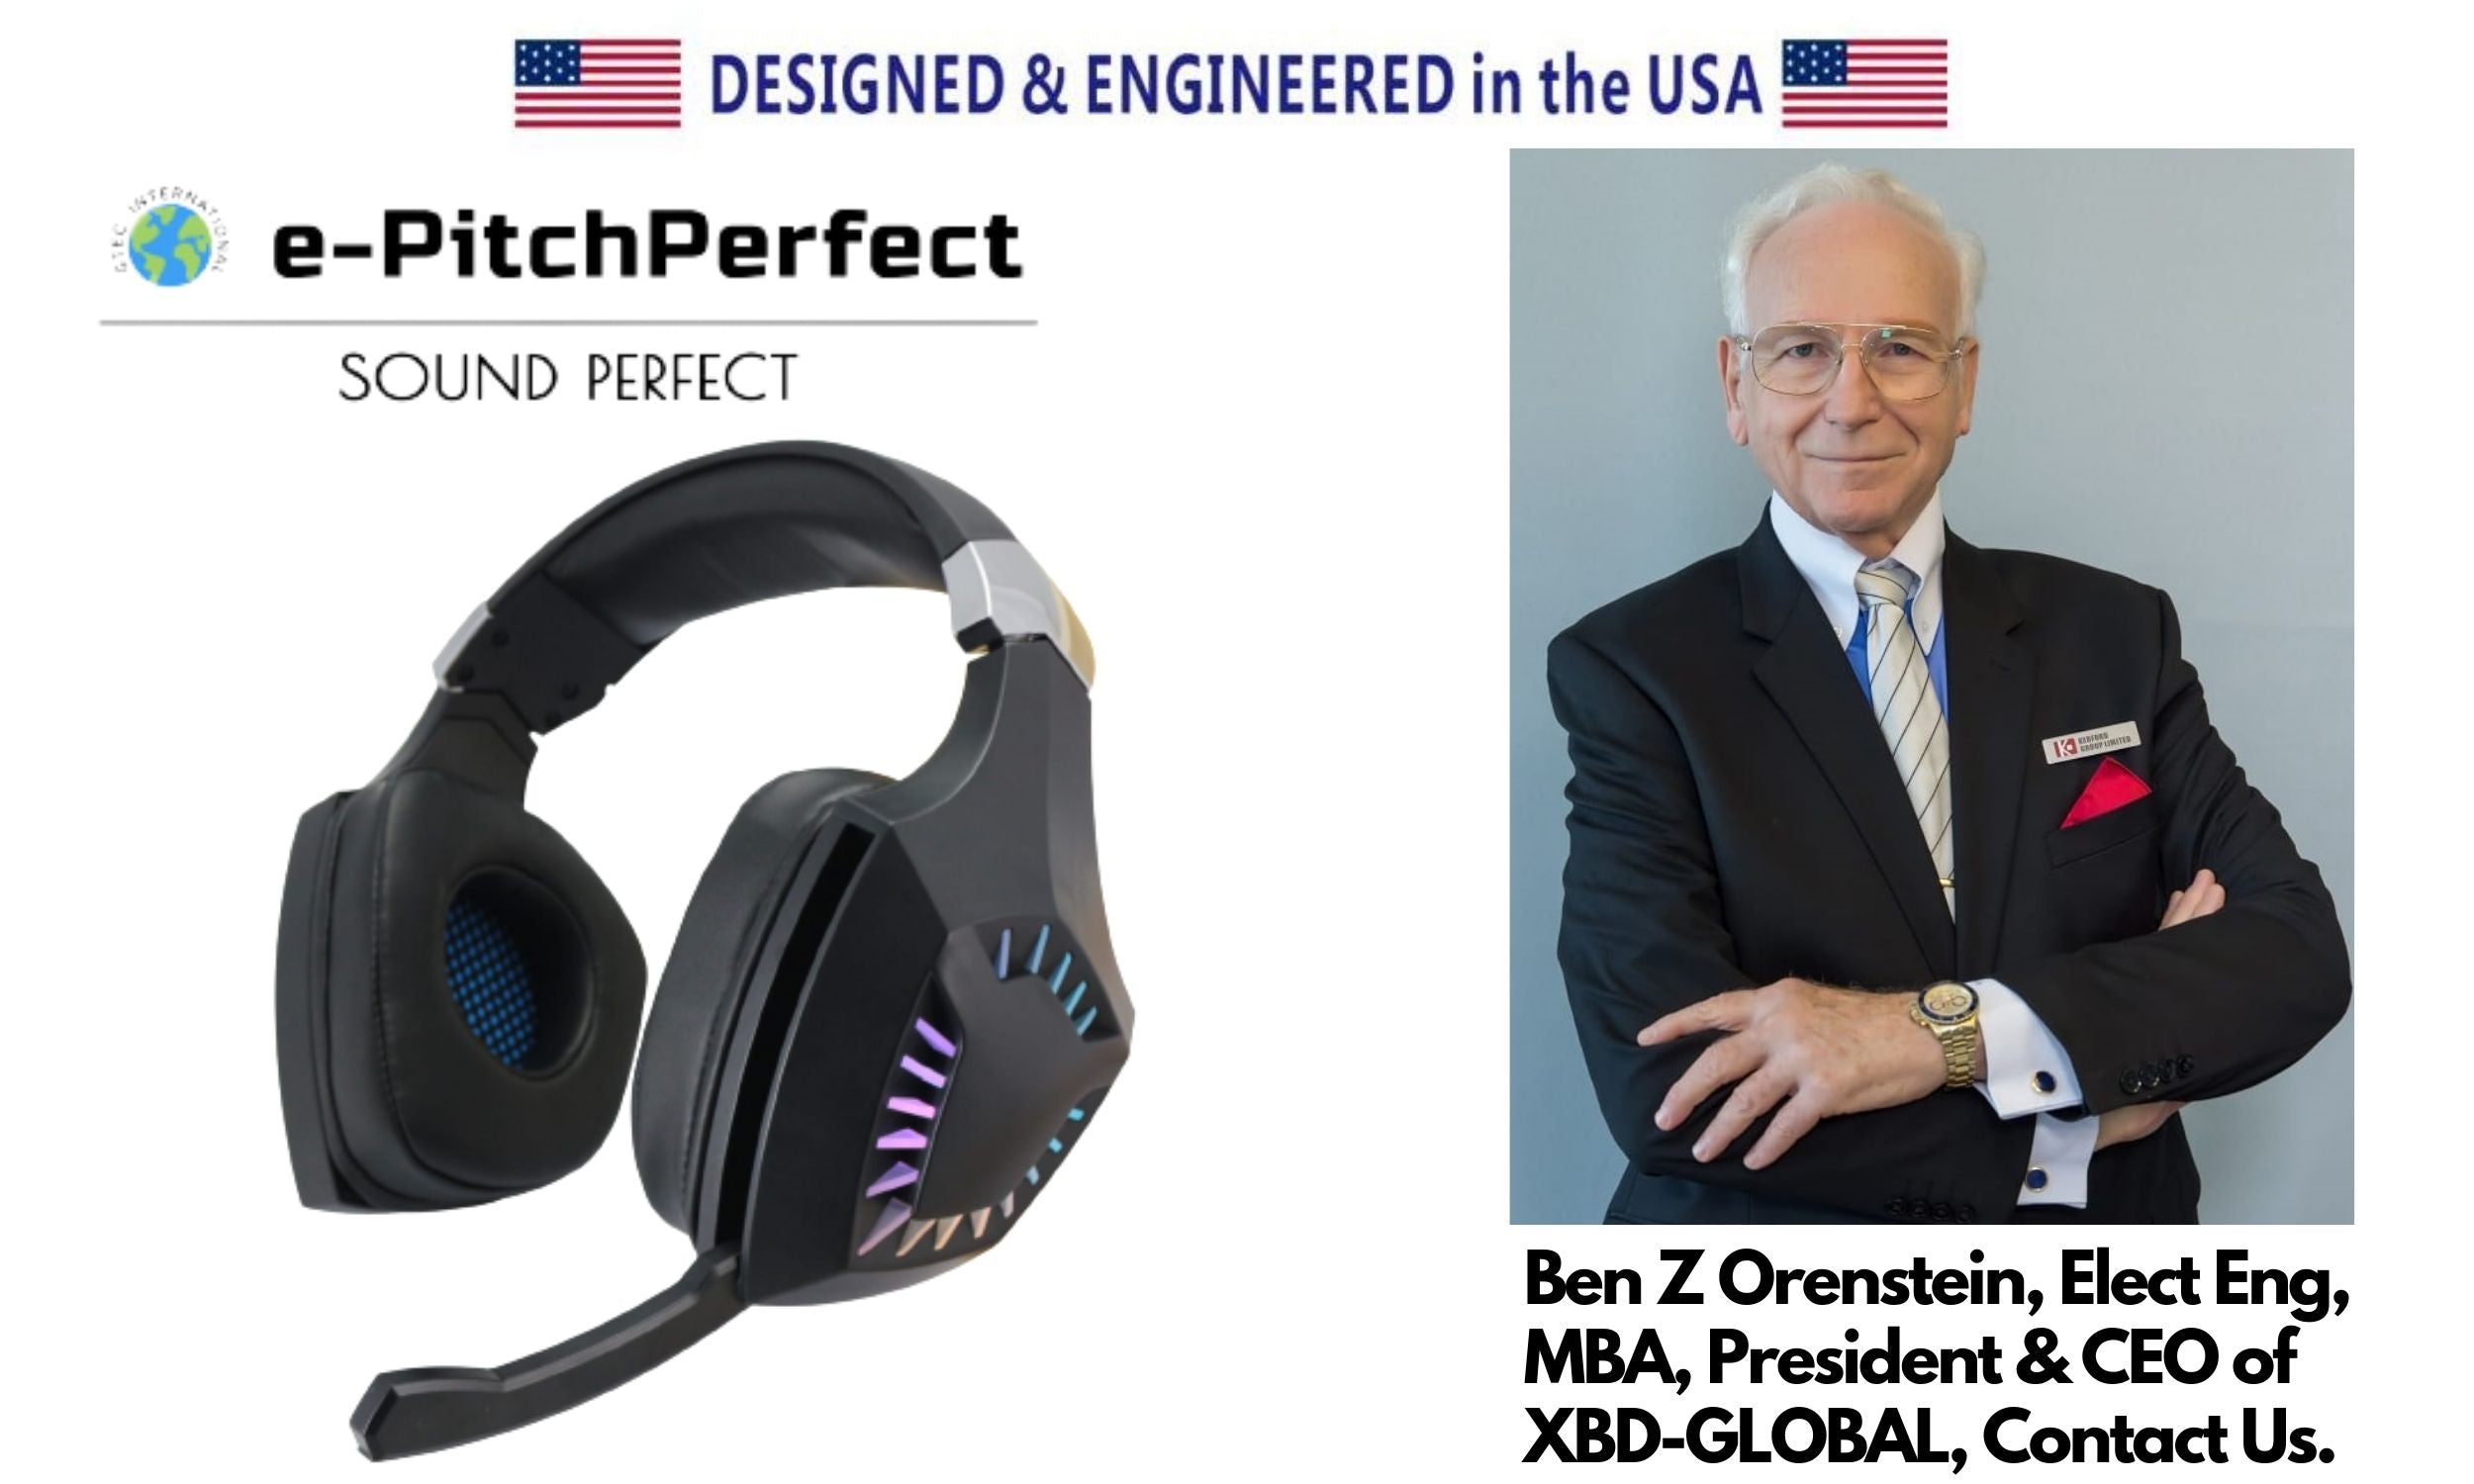 e-PitchPerfect e-PP 2.4G 无线游戏耳机带麦克风兼容 PS4、Xbox One、笔记本电脑、PC、iPhone 和 Android 手机在美国设计和制造